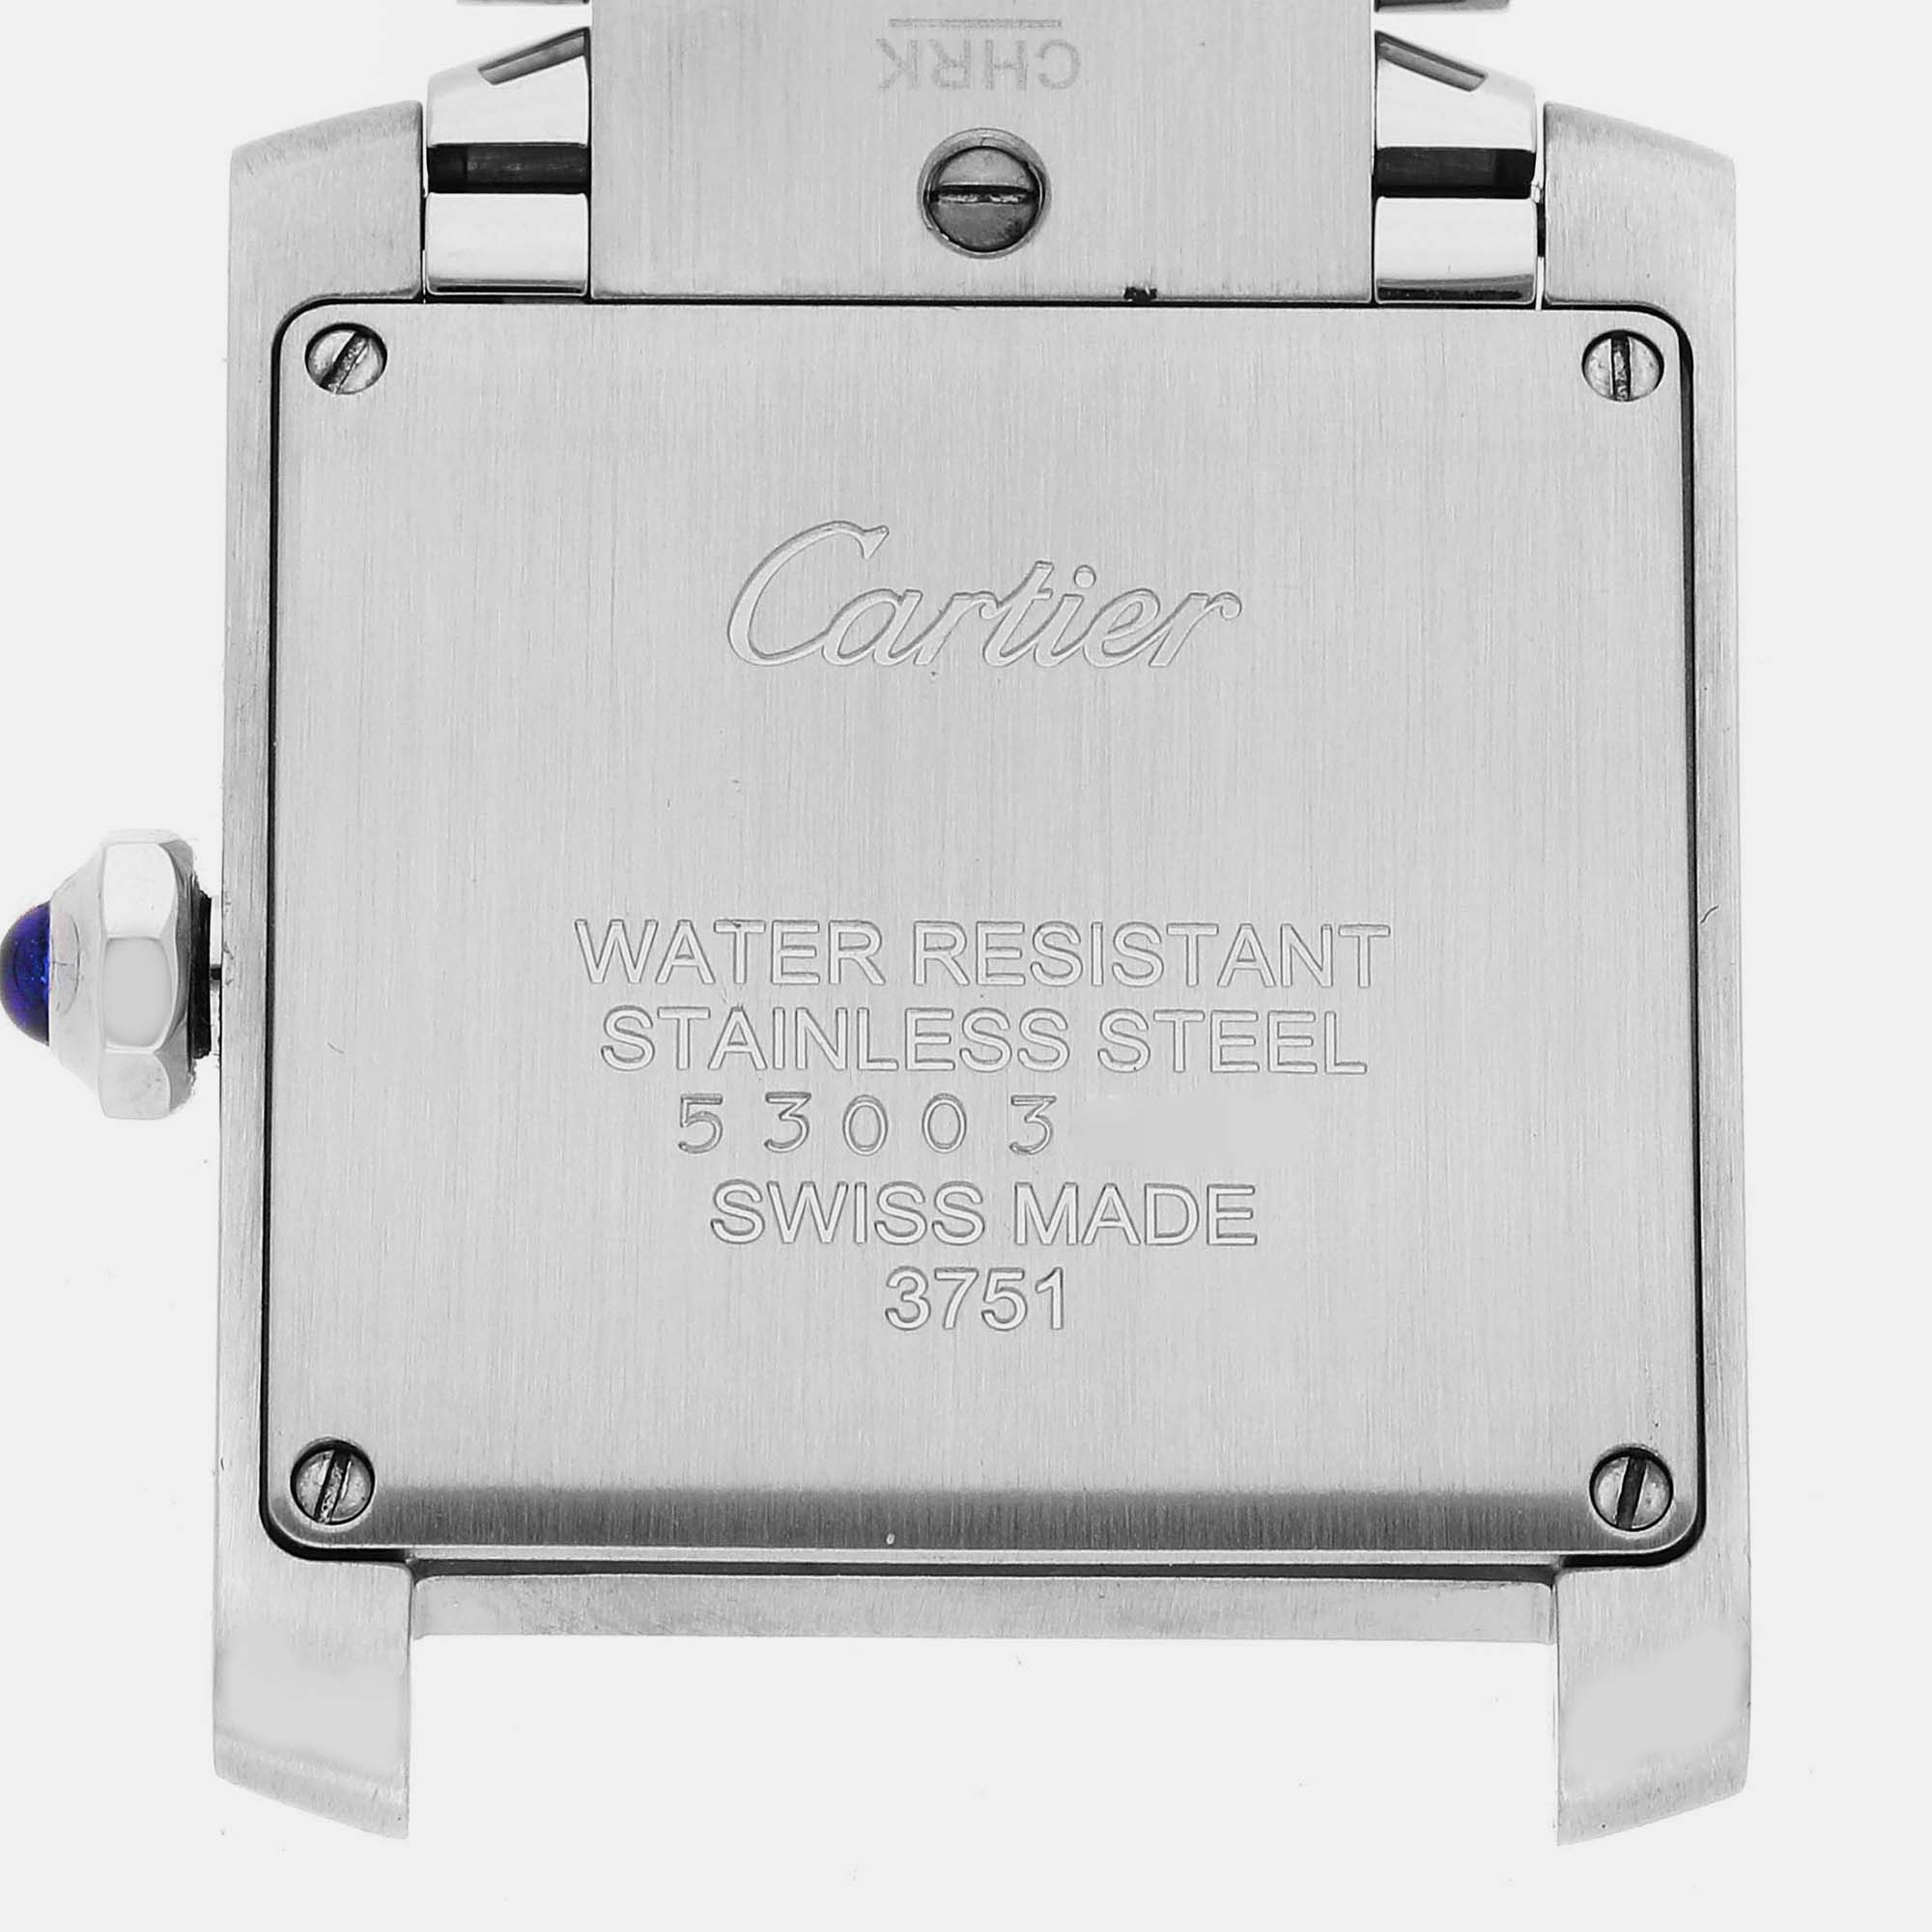 Cartier Tank Francaise Midsize Diamond Steel Ladies Watch WE110007 25.0 Mm X 30.0 Mm